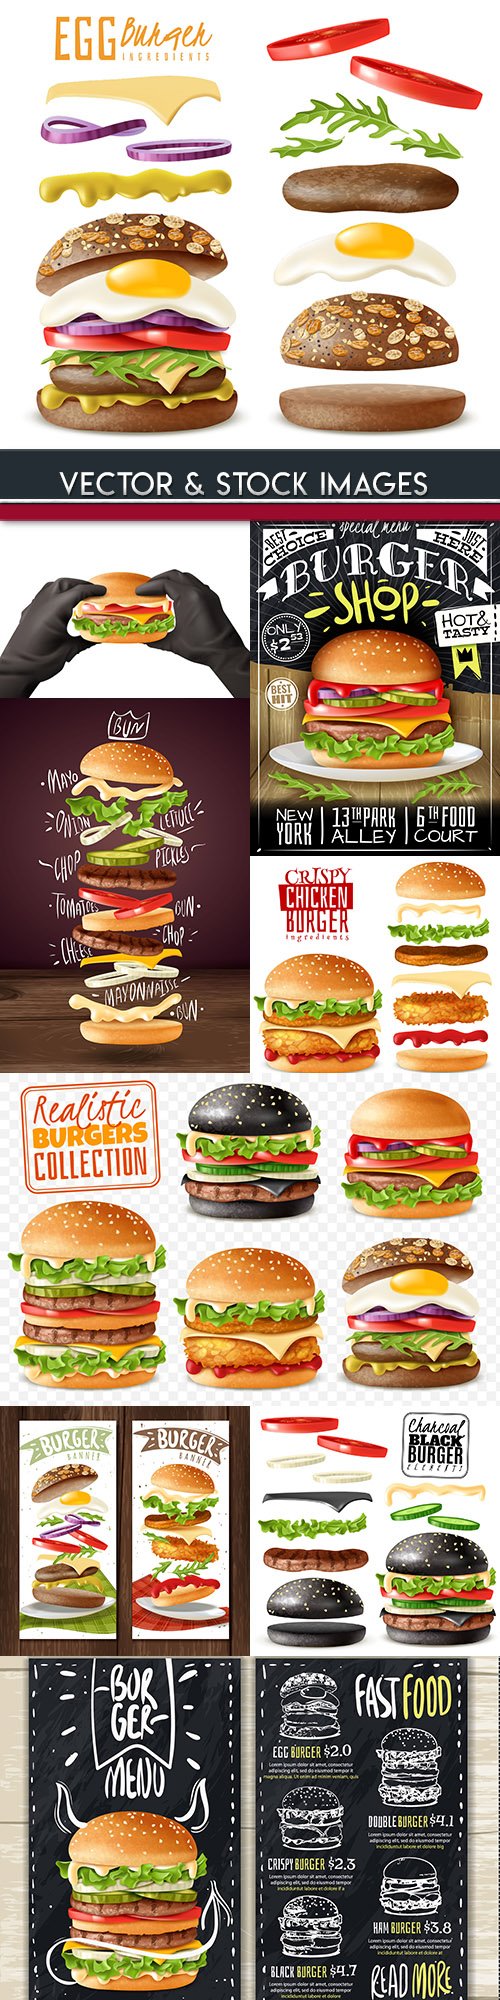 Menu burger with fillings realistic 3d illustrations